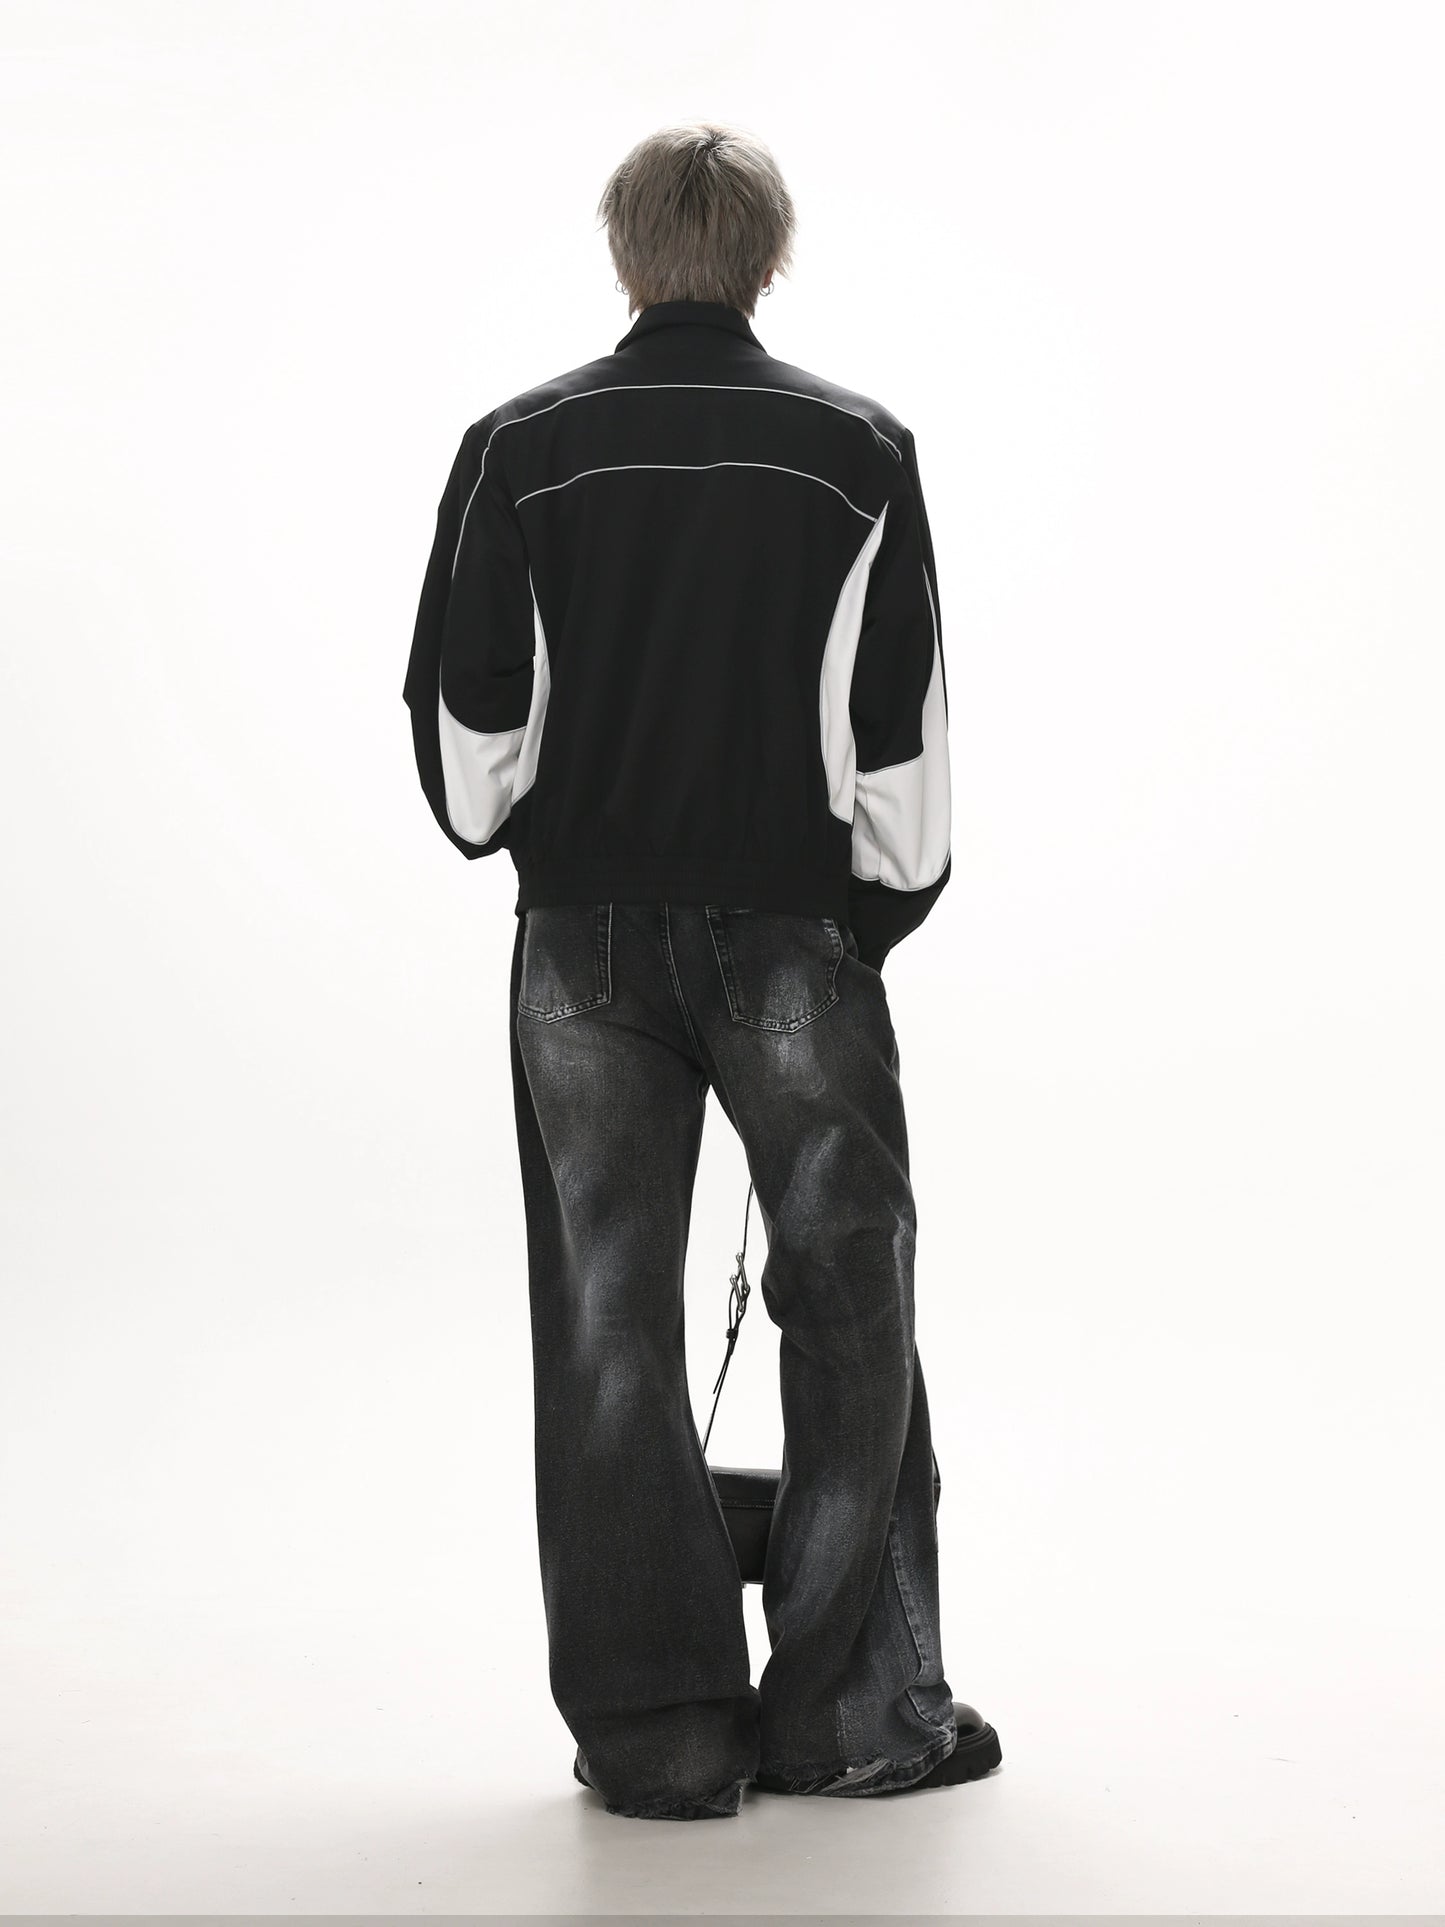 GIBBYCNA American Retro Washed Black Gray Slightly Flared Jeans Men's High Street vibe Style Slim Straight Pants